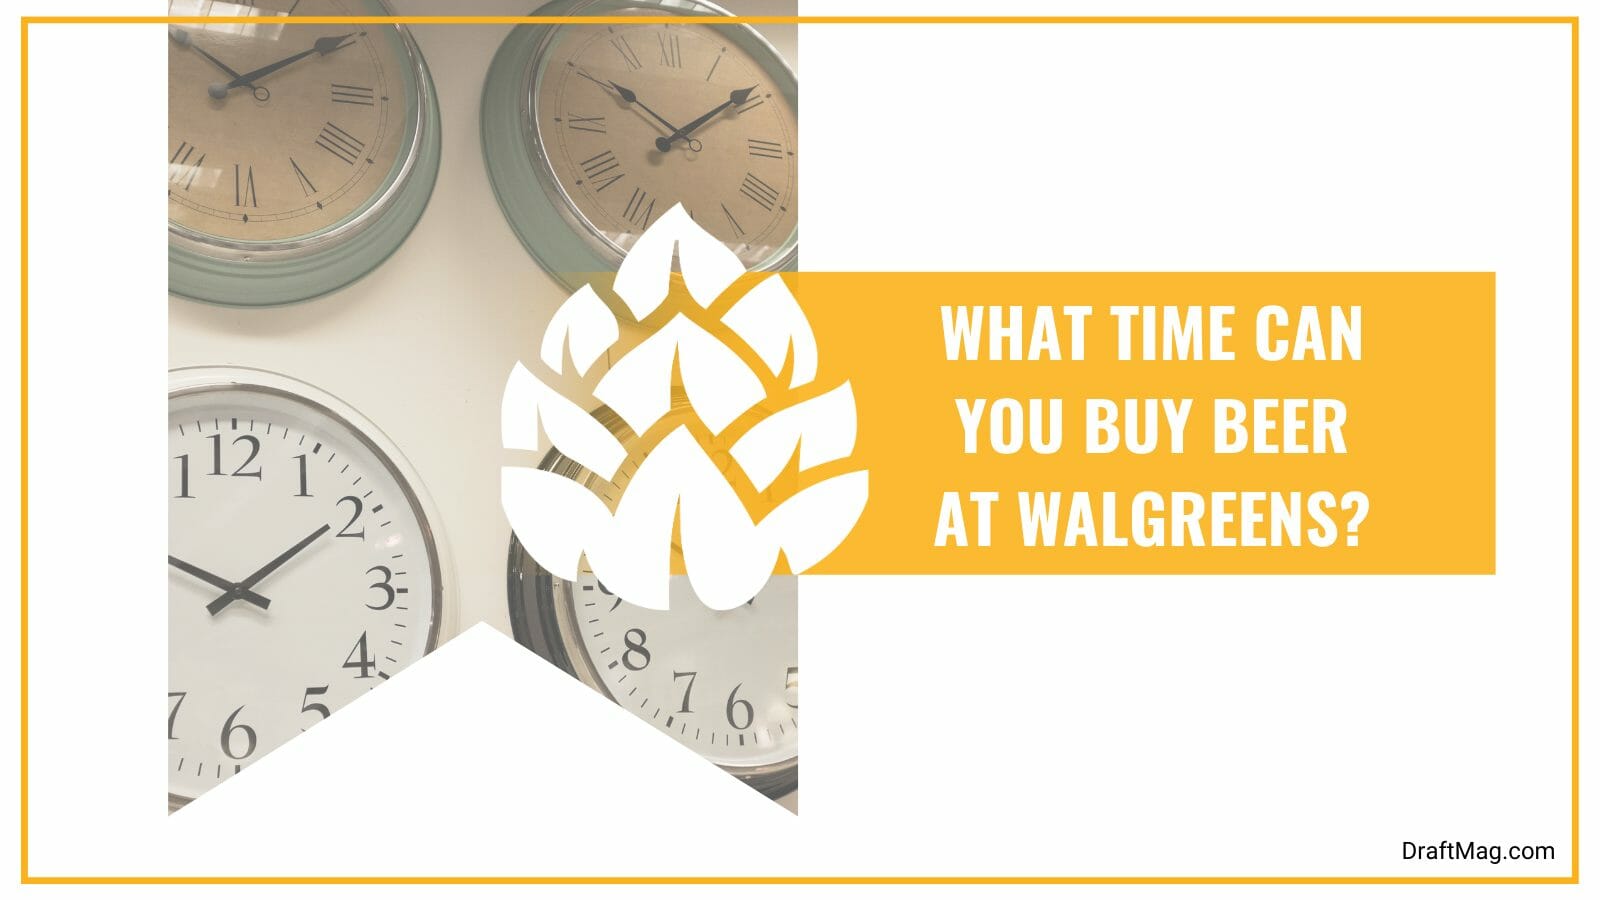 Regular time to buy beer at walgreens